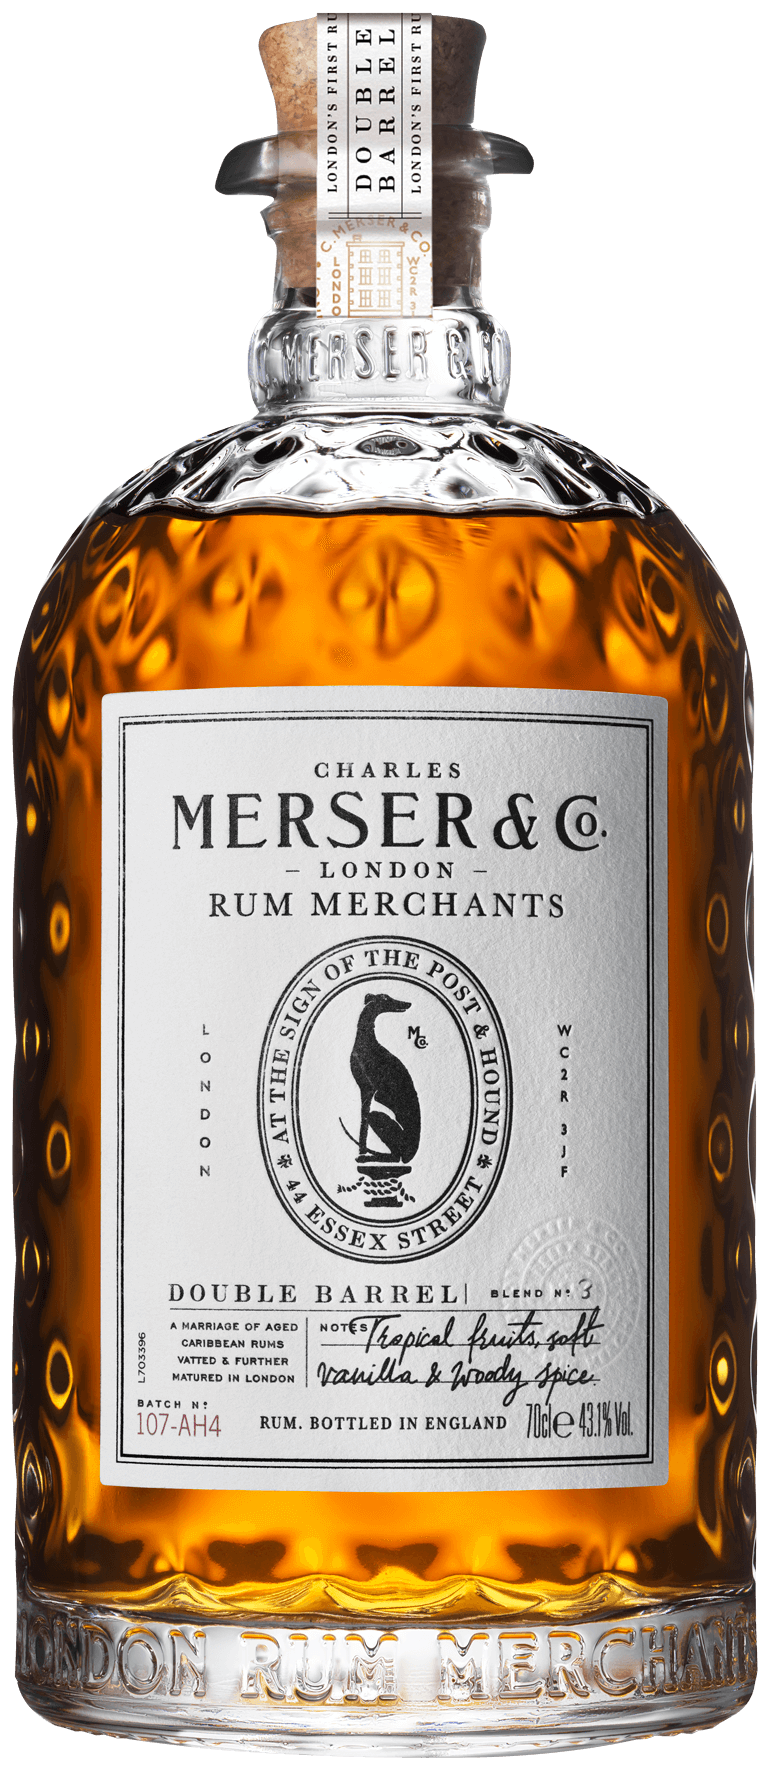 An image of a bottle of Merser & Co. Double Barrel Golden Brown Rum